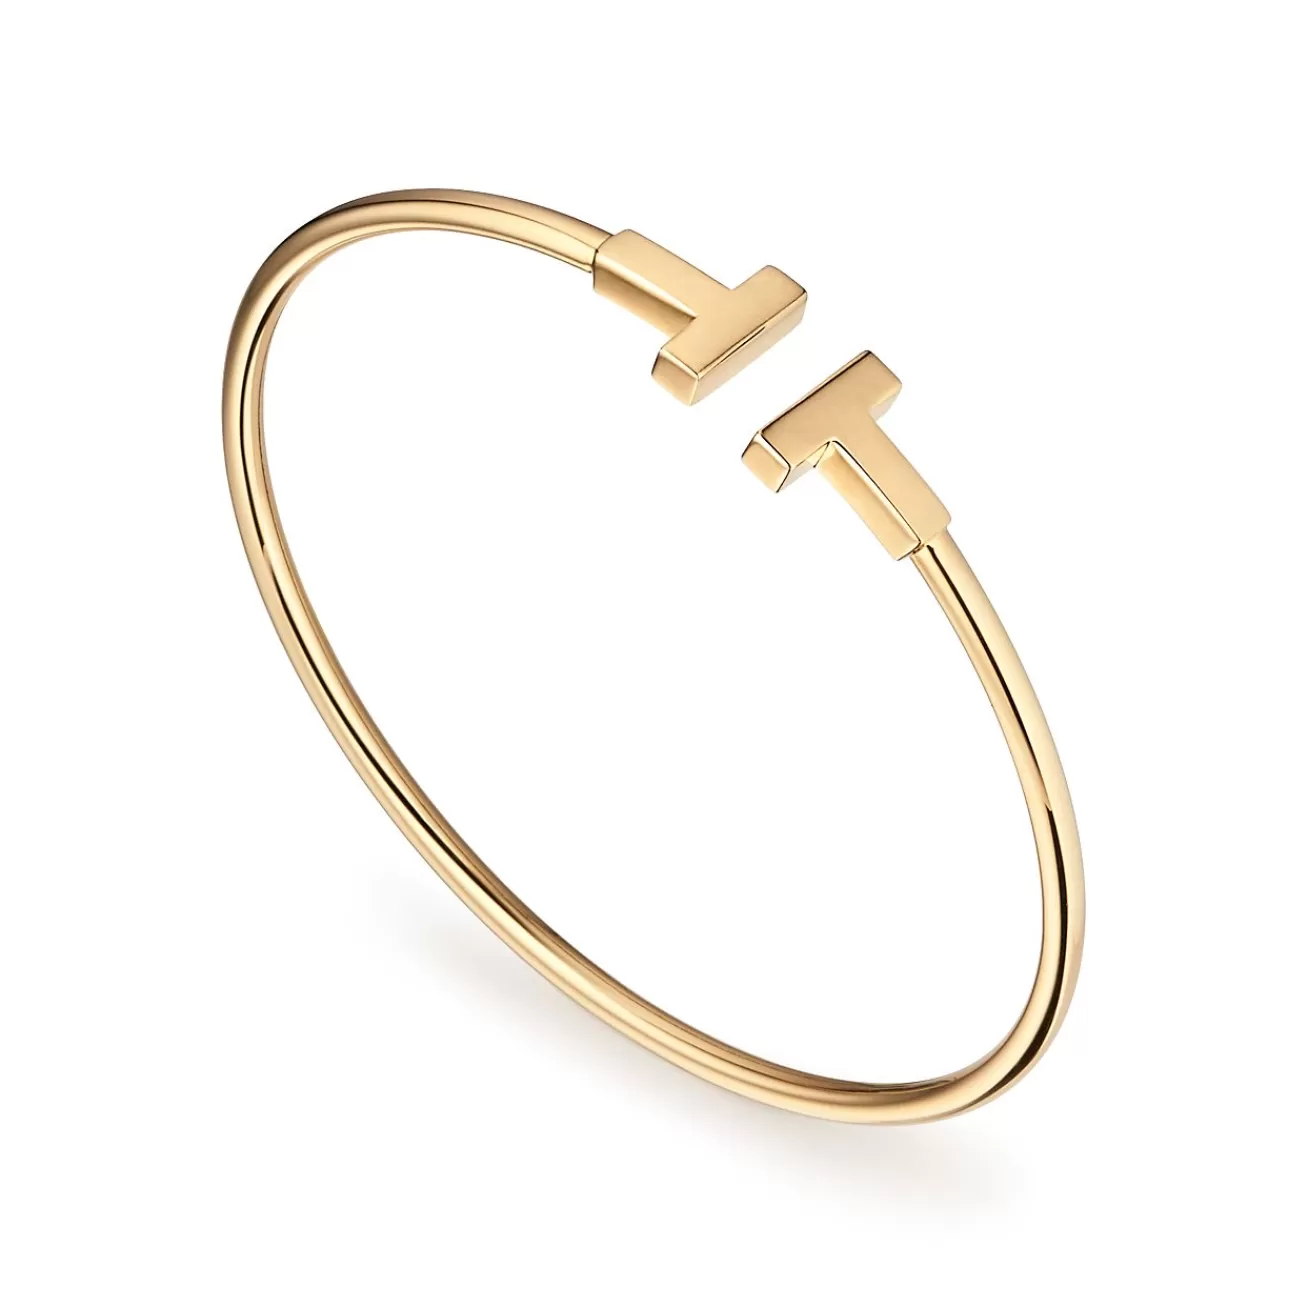 Tiffany & Co. Tiffany T wire bracelet in 18k gold, medium. | ^ Bracelets | Gifts for Her